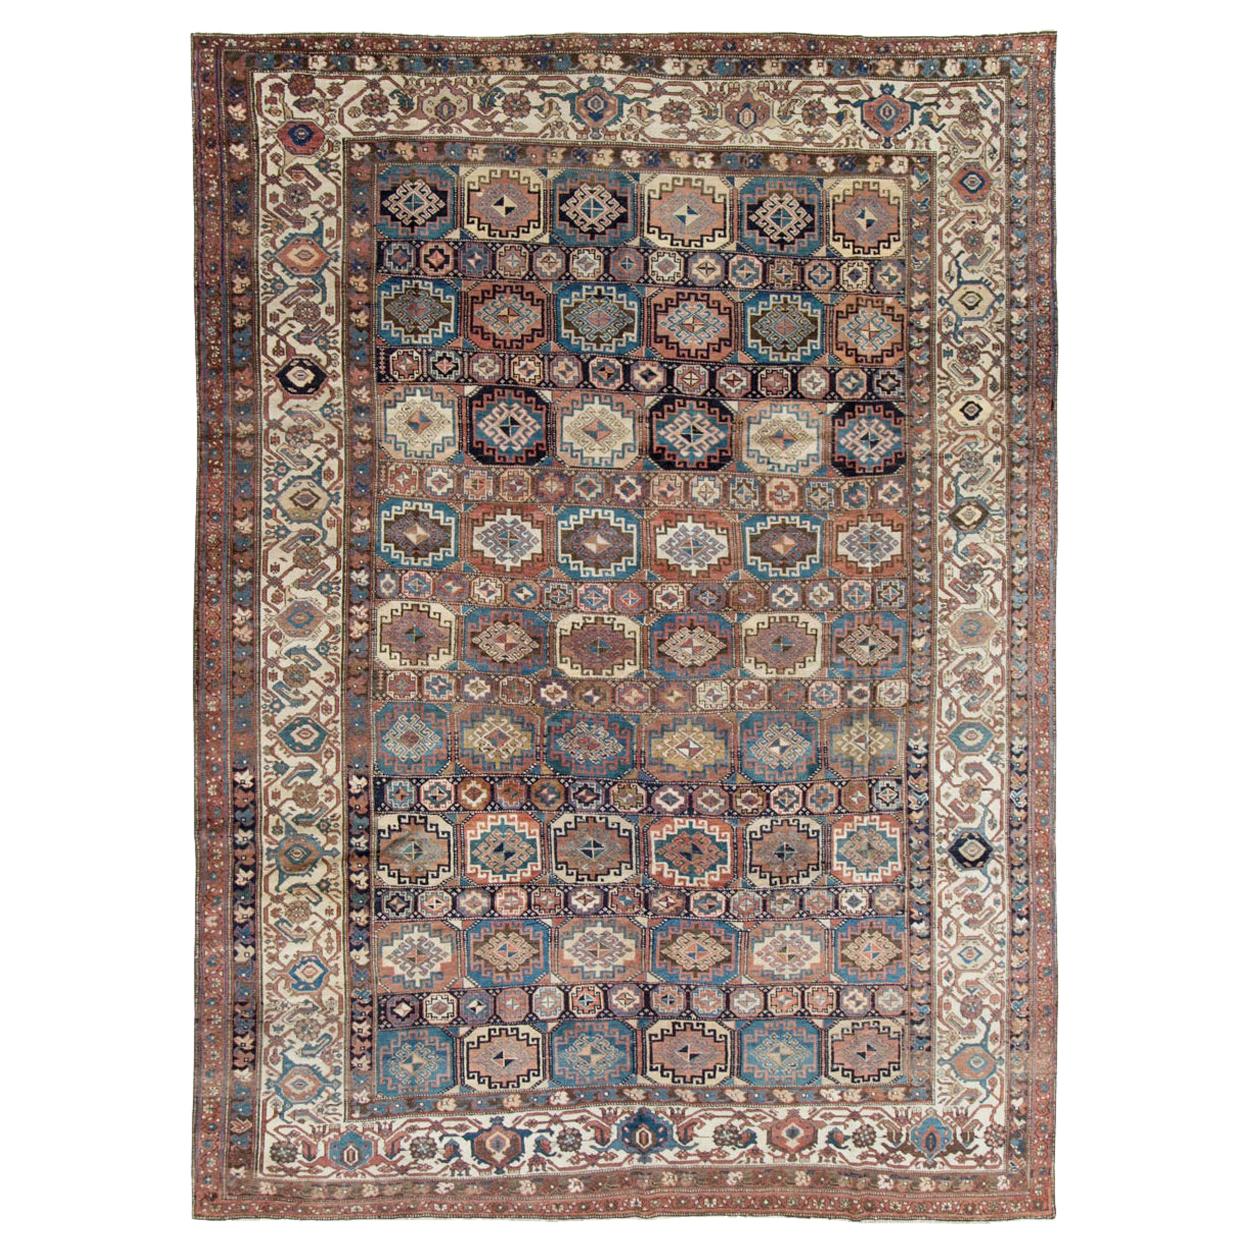 Early 20th Century Handmade Northwest Persian Room Size Carpet